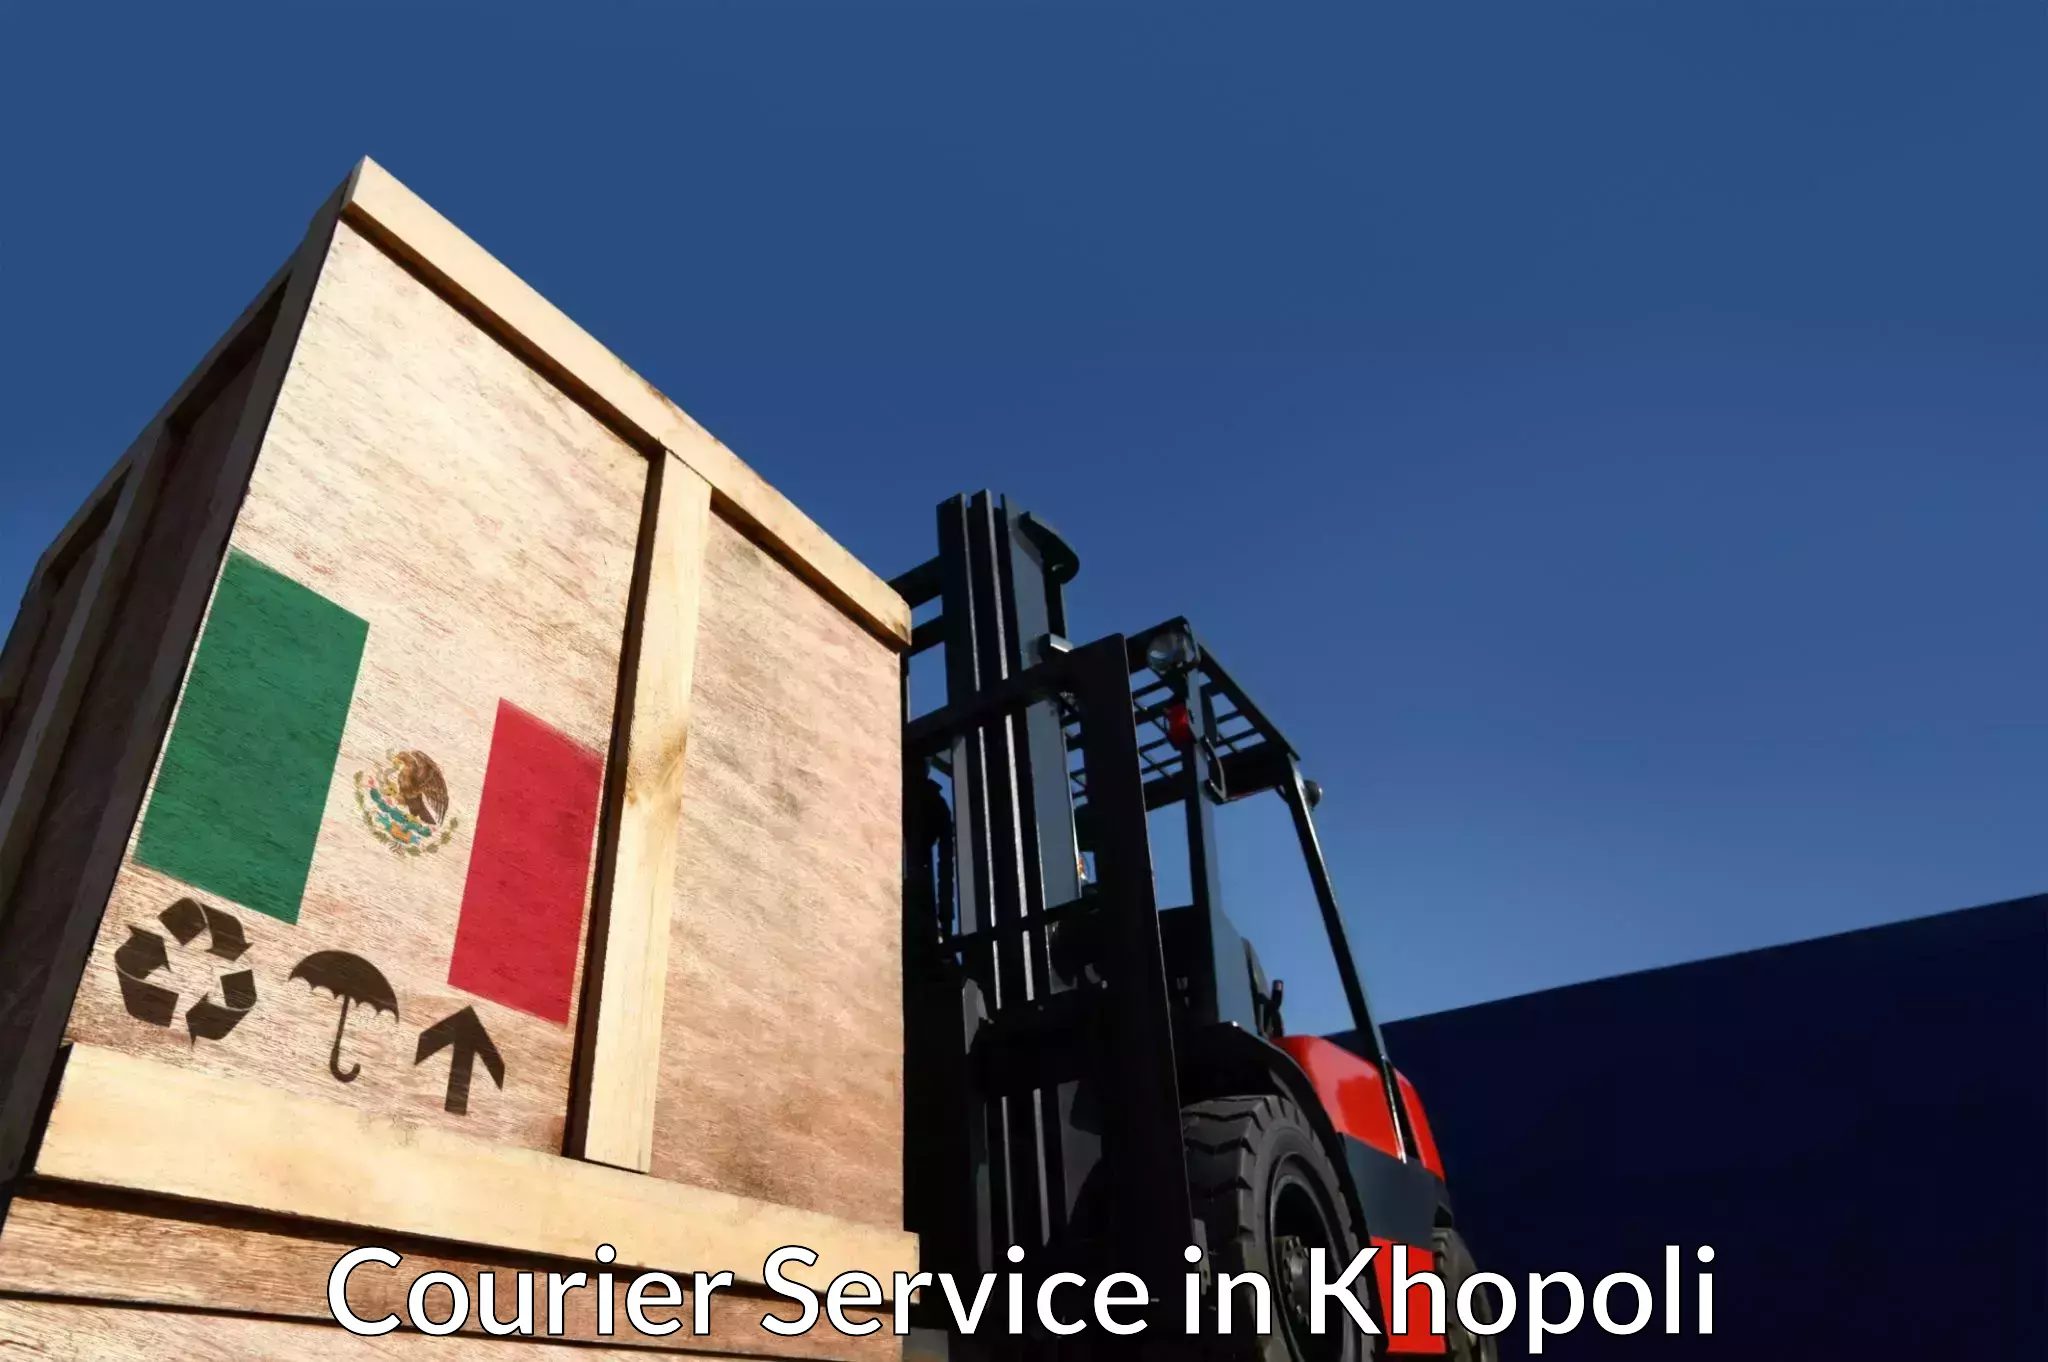 Affordable international shipping in Khopoli